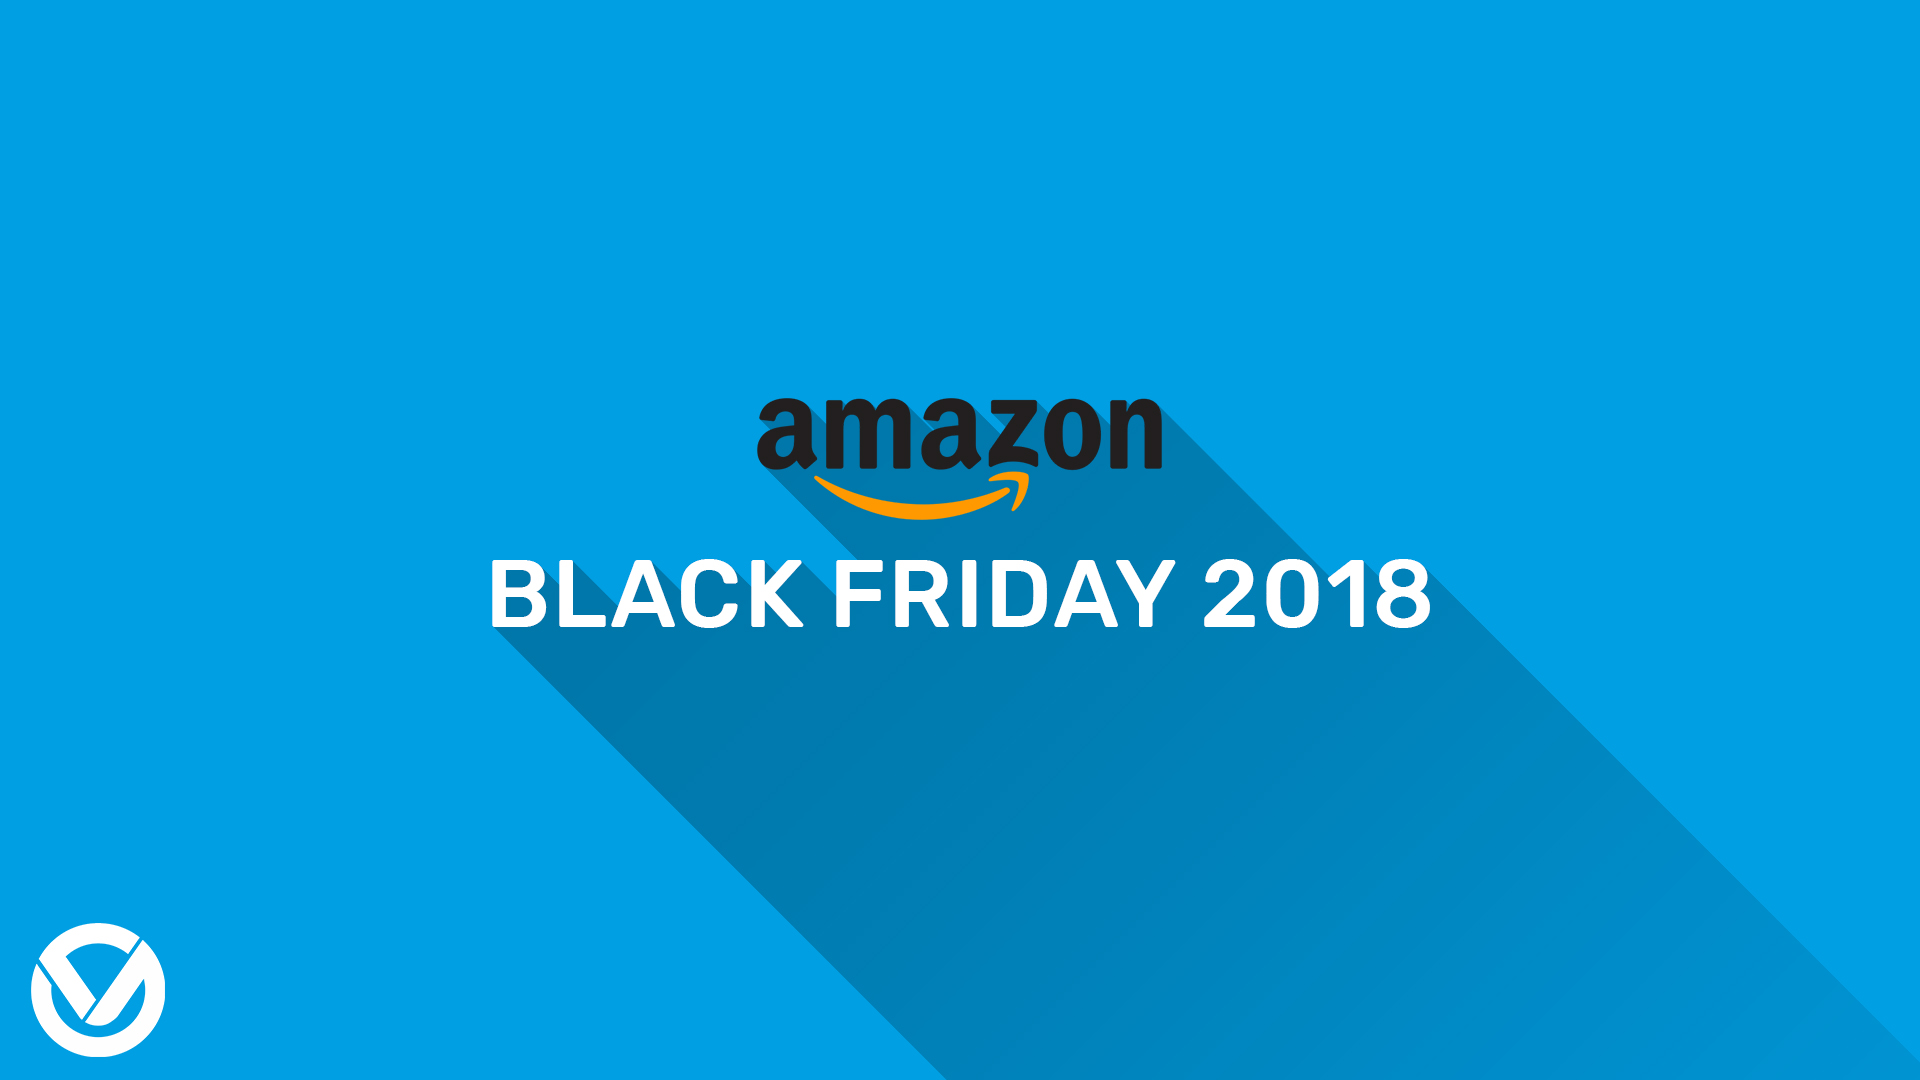 Amazon - Black Friday 2018